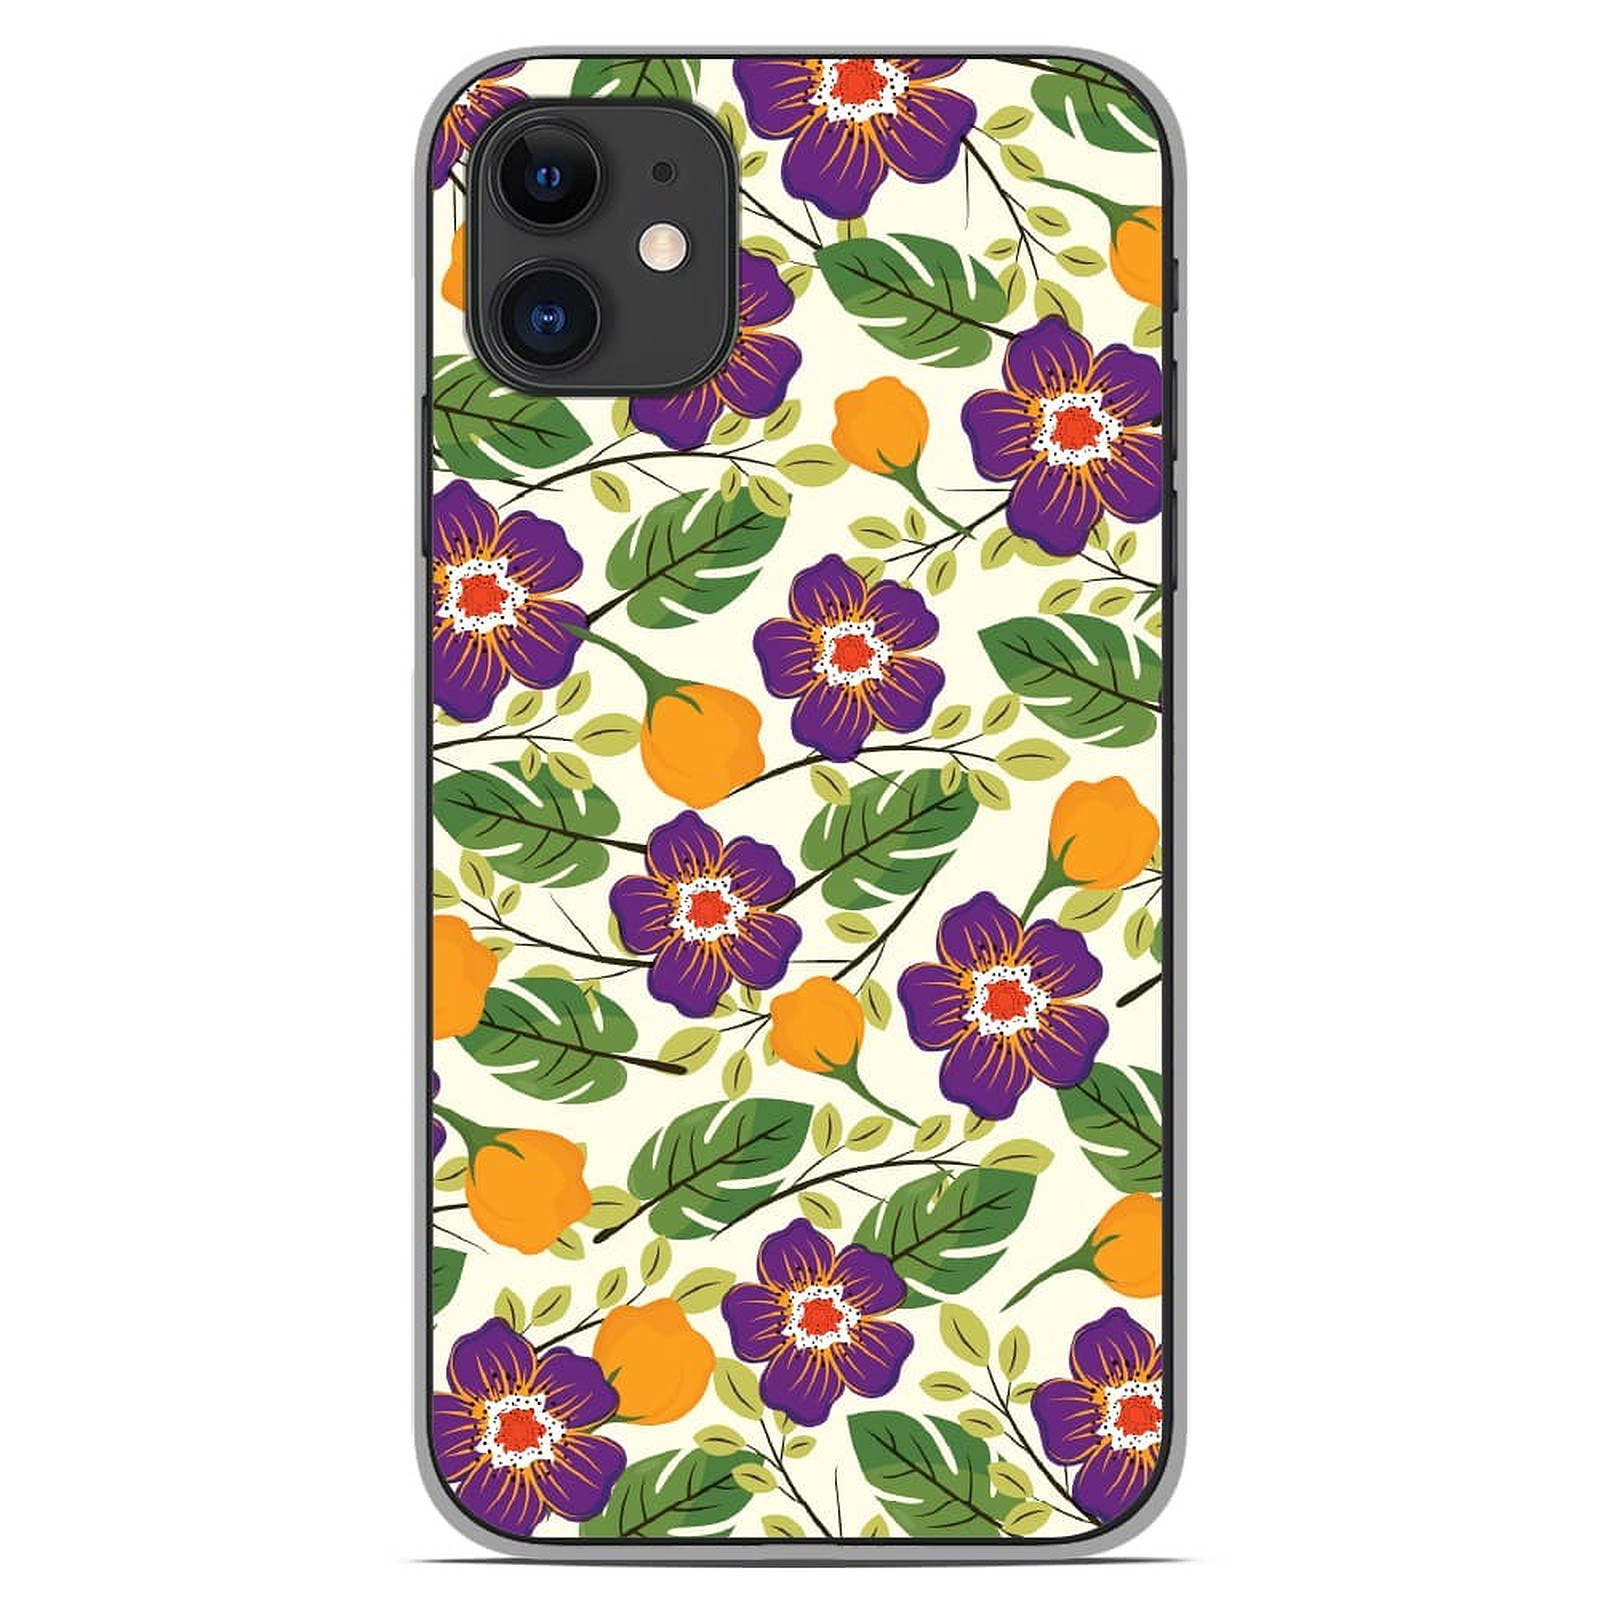 1001 Coques Coque silicone gel Apple iPhone 11 motif Fleurs Violettes - Coque telephone 1001Coques